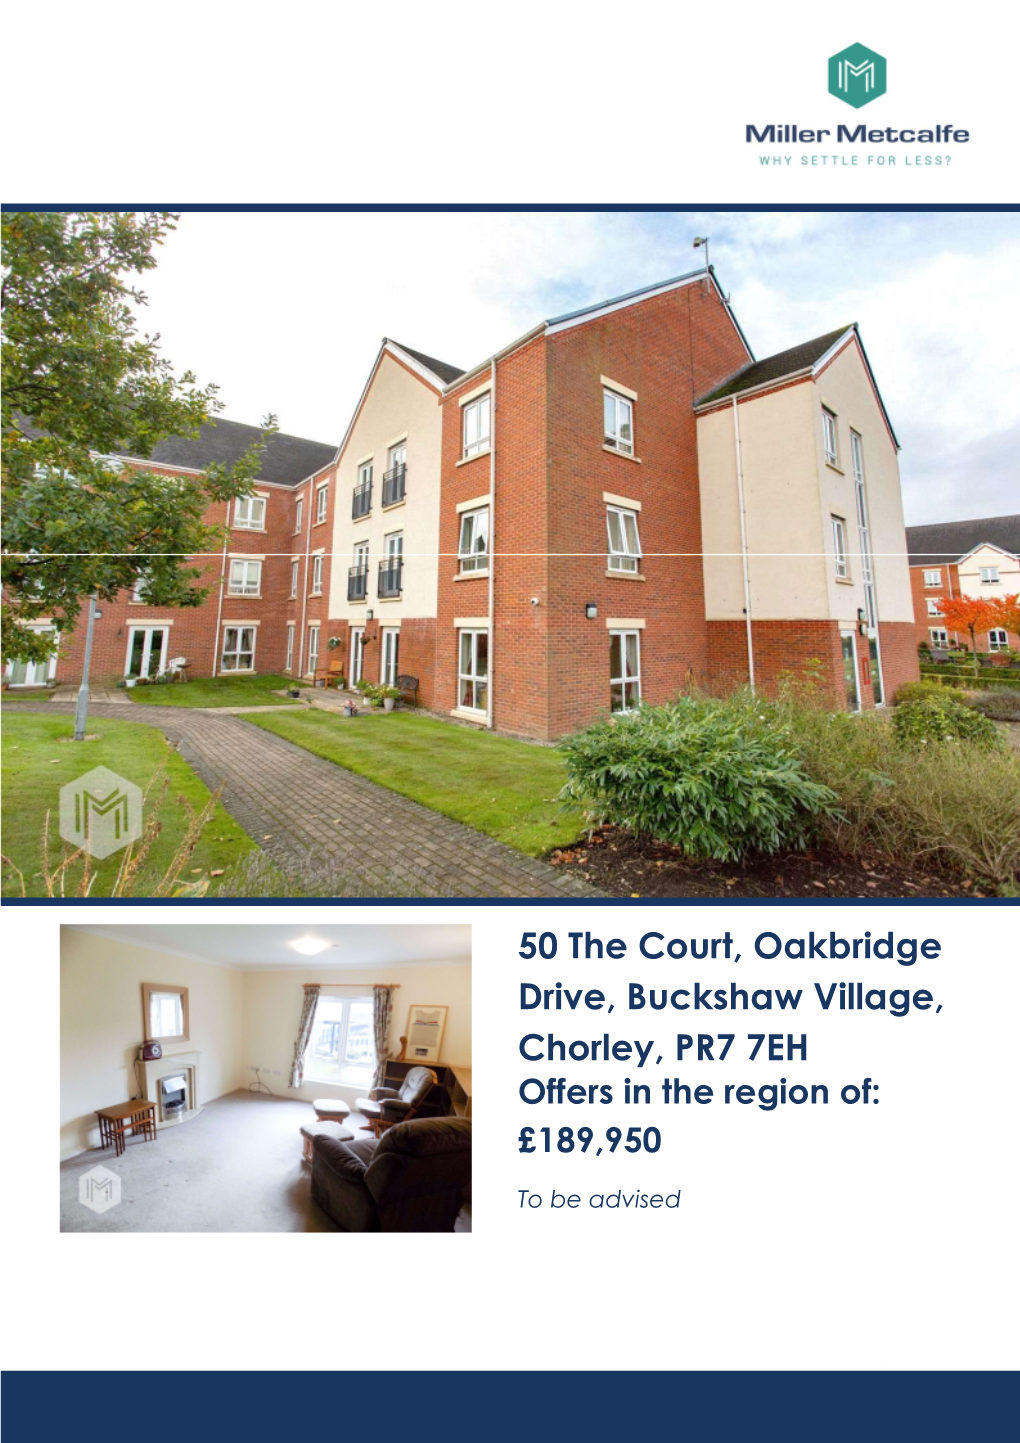 50 the Court, Oakbridge Drive, Buckshaw Village, Chorley, PR7 7EH Offers in the Region Of: £189,950